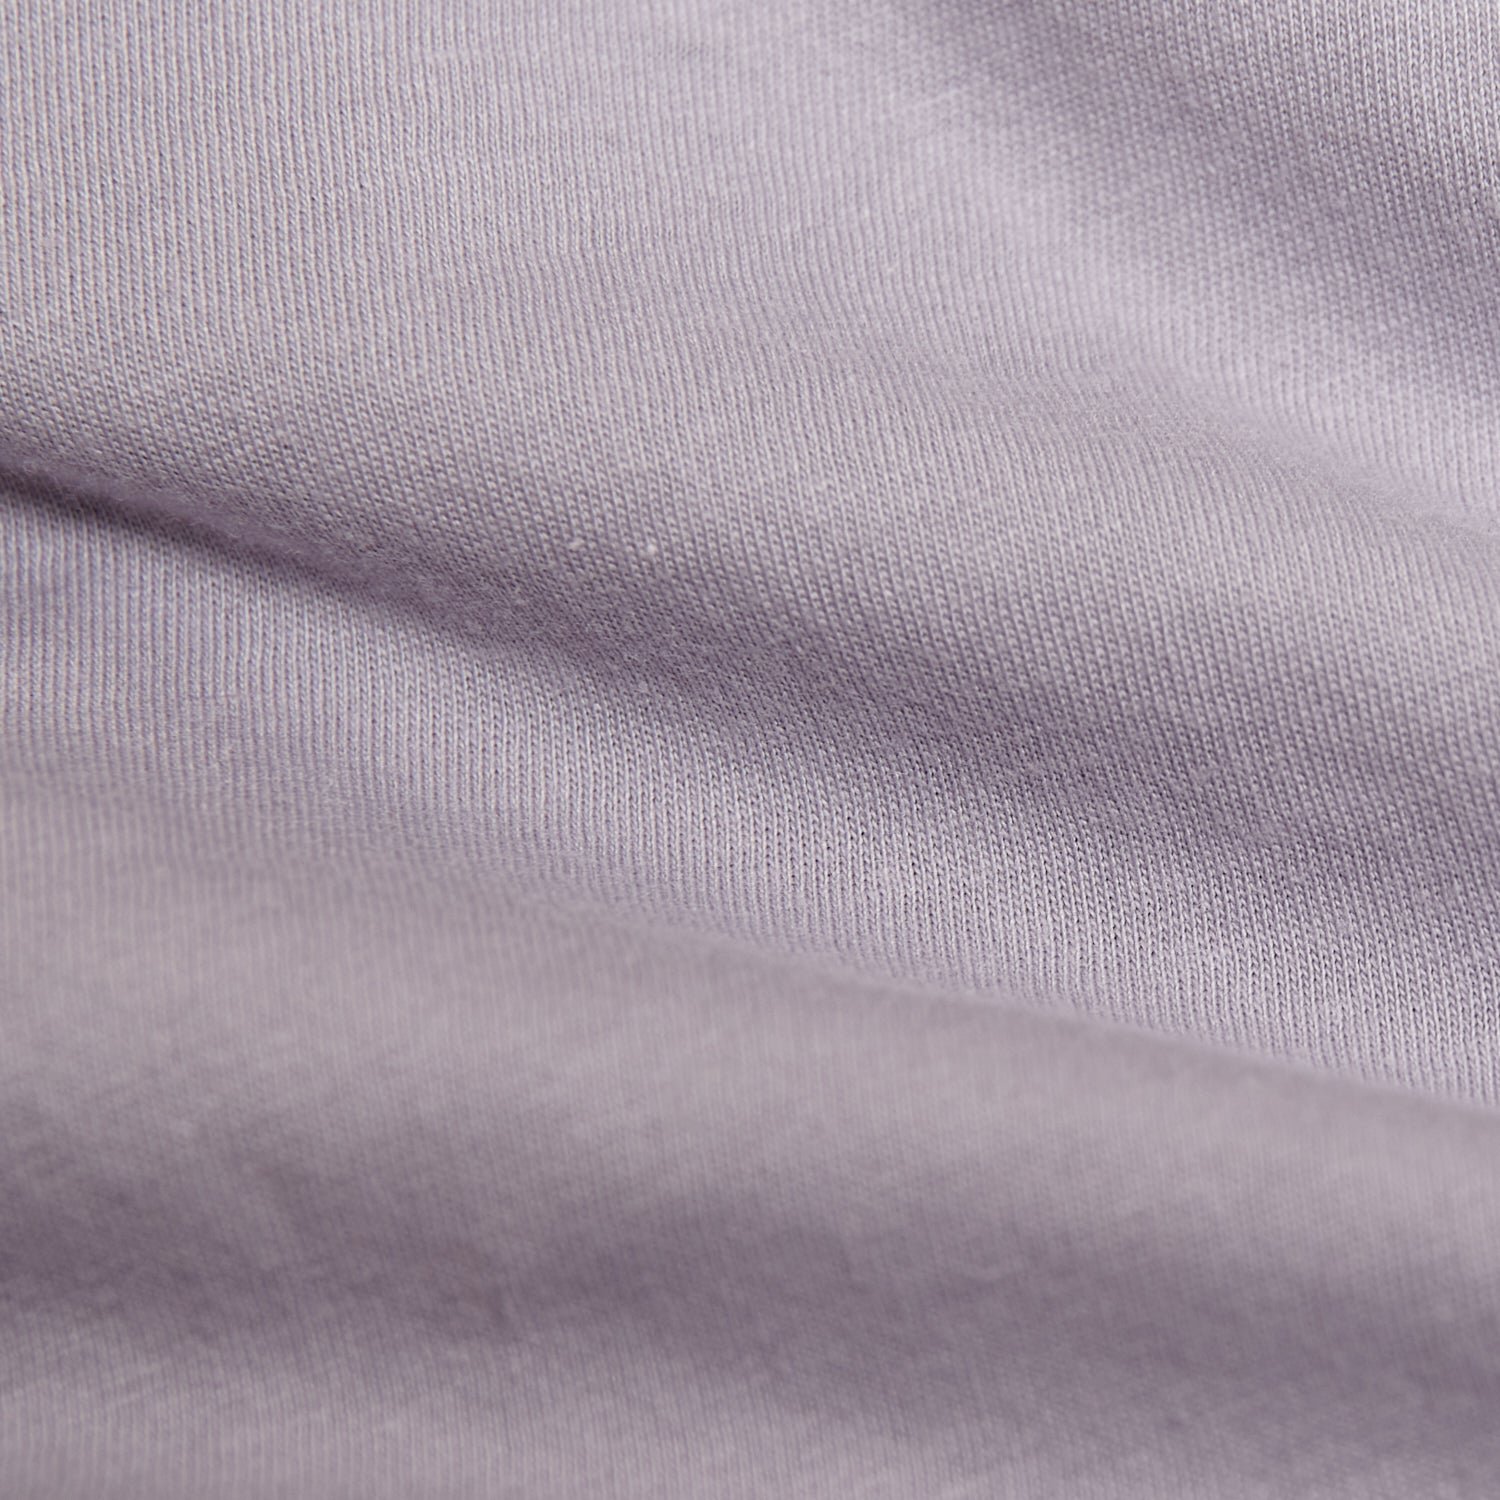 Lilac Gray V-Neck T-Shirt